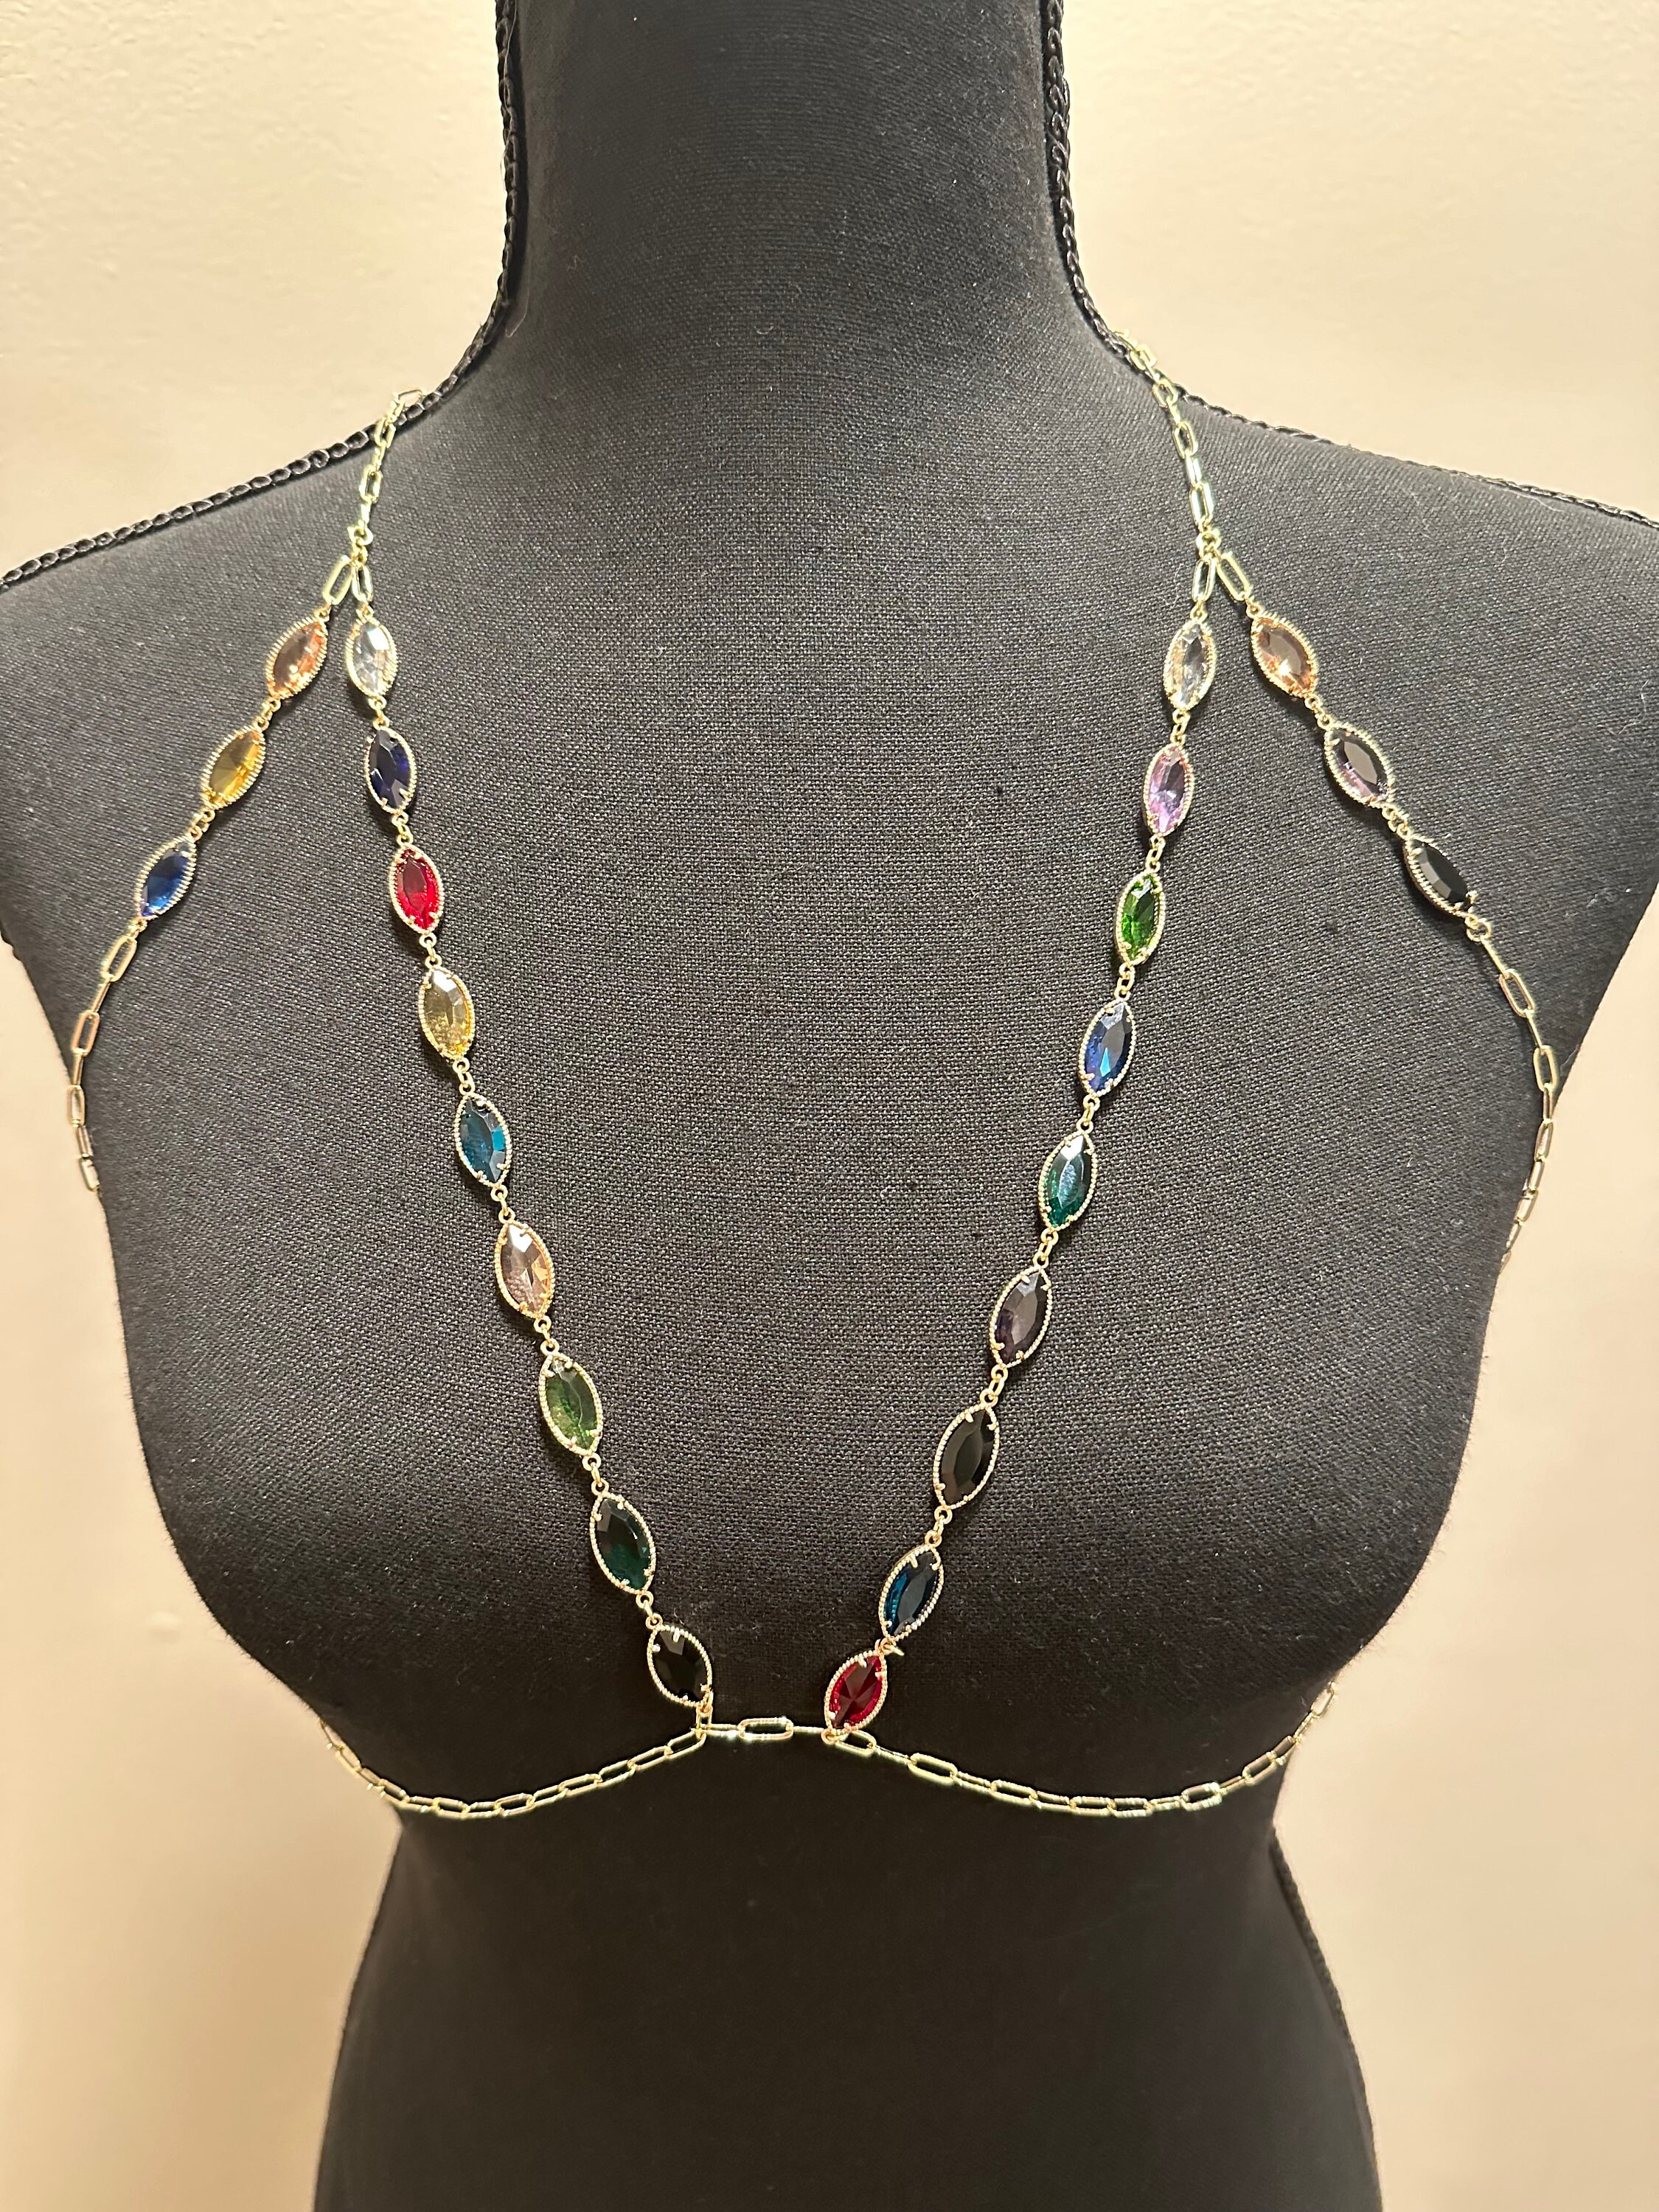 Vintage Silver Chain Crystal Beaded Bra Harness Top – PauméLosAngeles